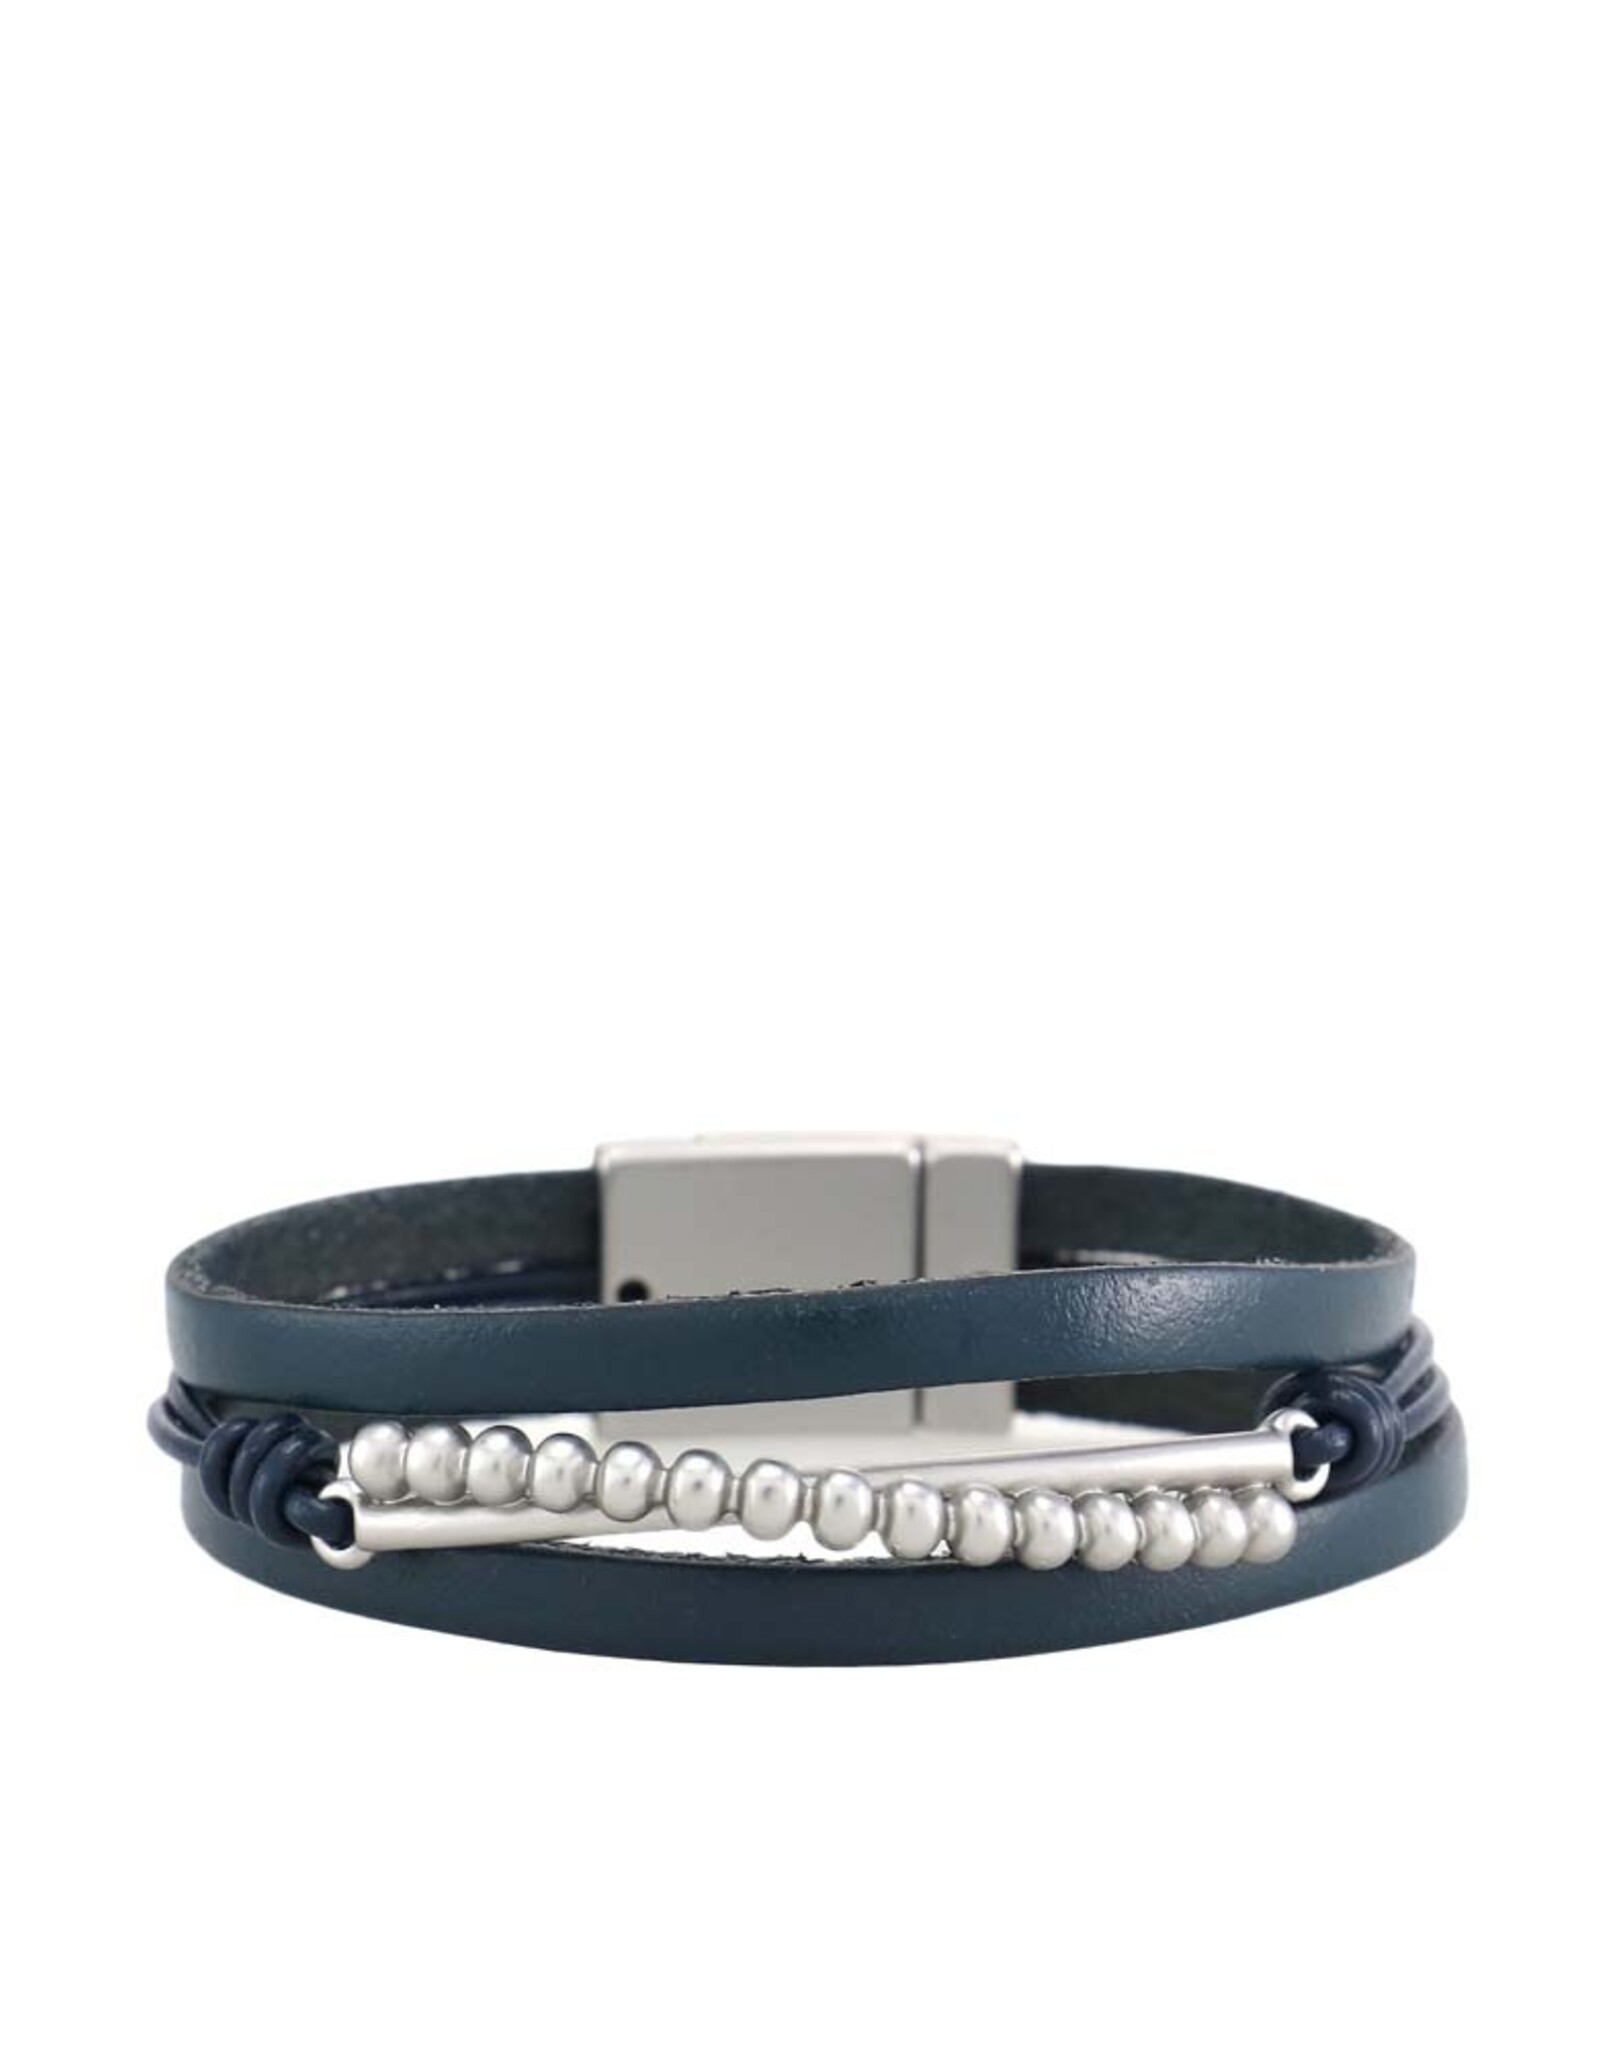 Merx Inc. Fashion Bracelet M-RH + navy + 120 middle